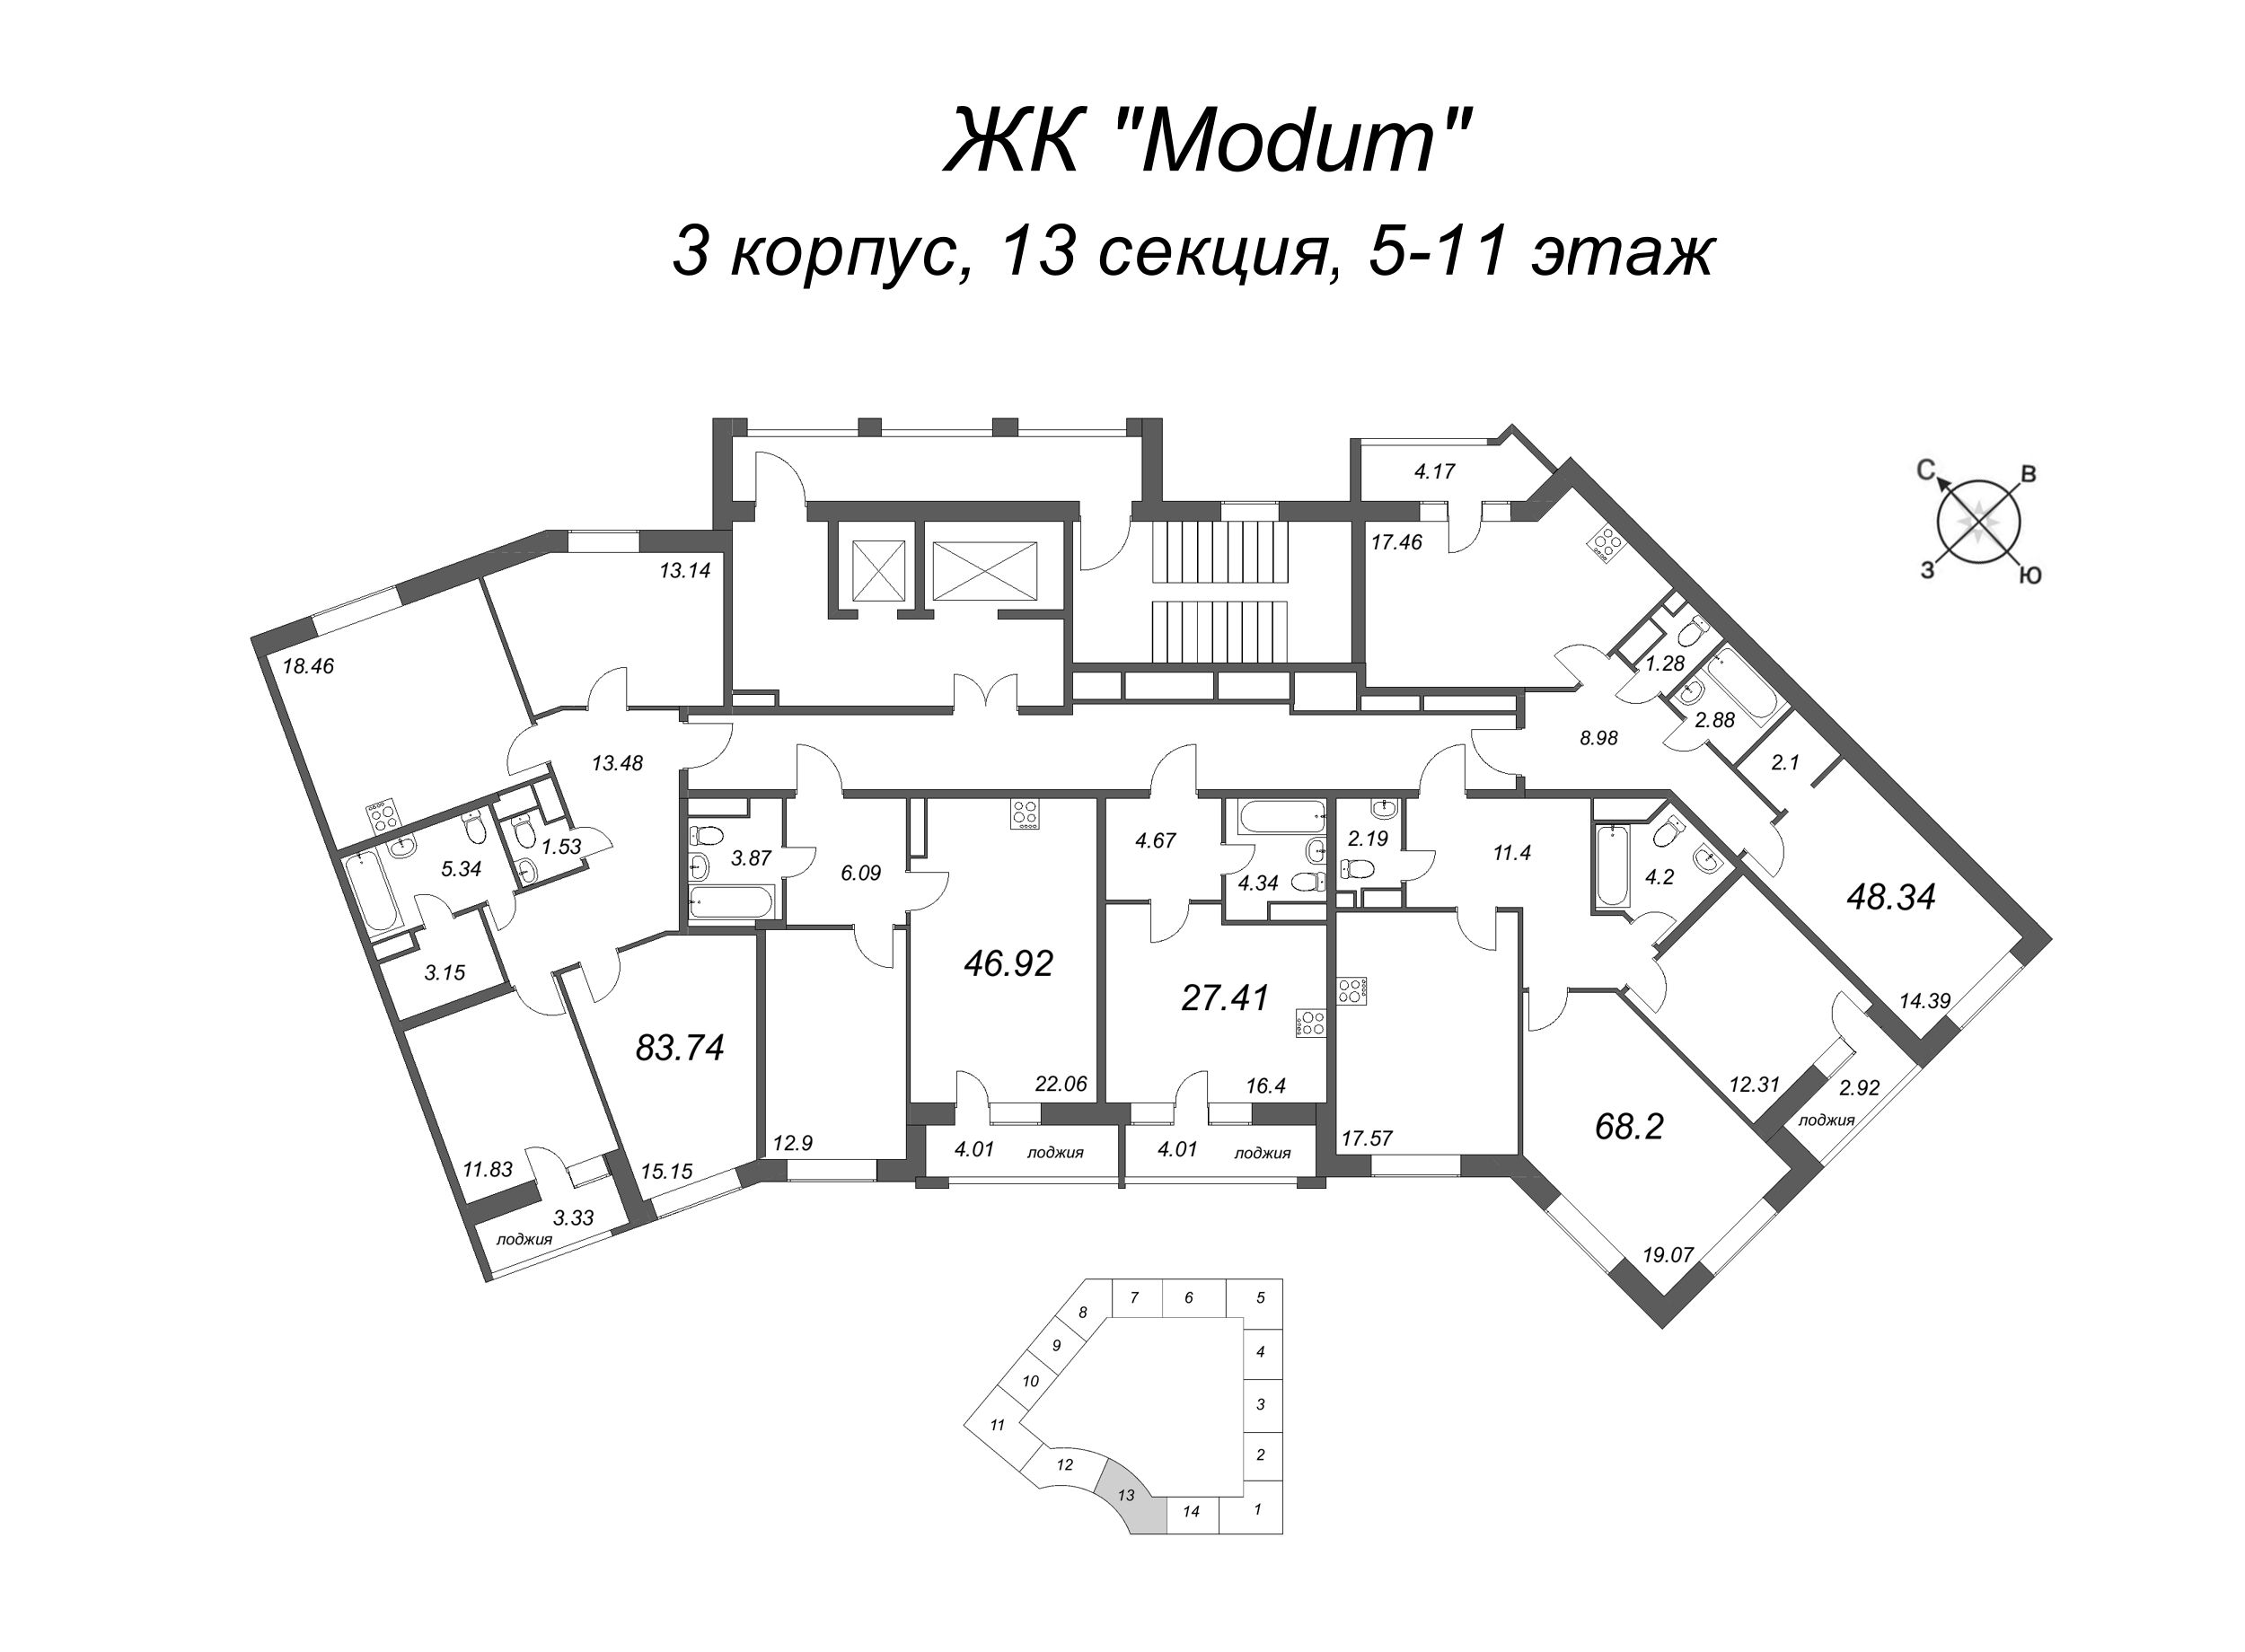 2-комнатная (Евро) квартира, 48.34 м² - планировка этажа